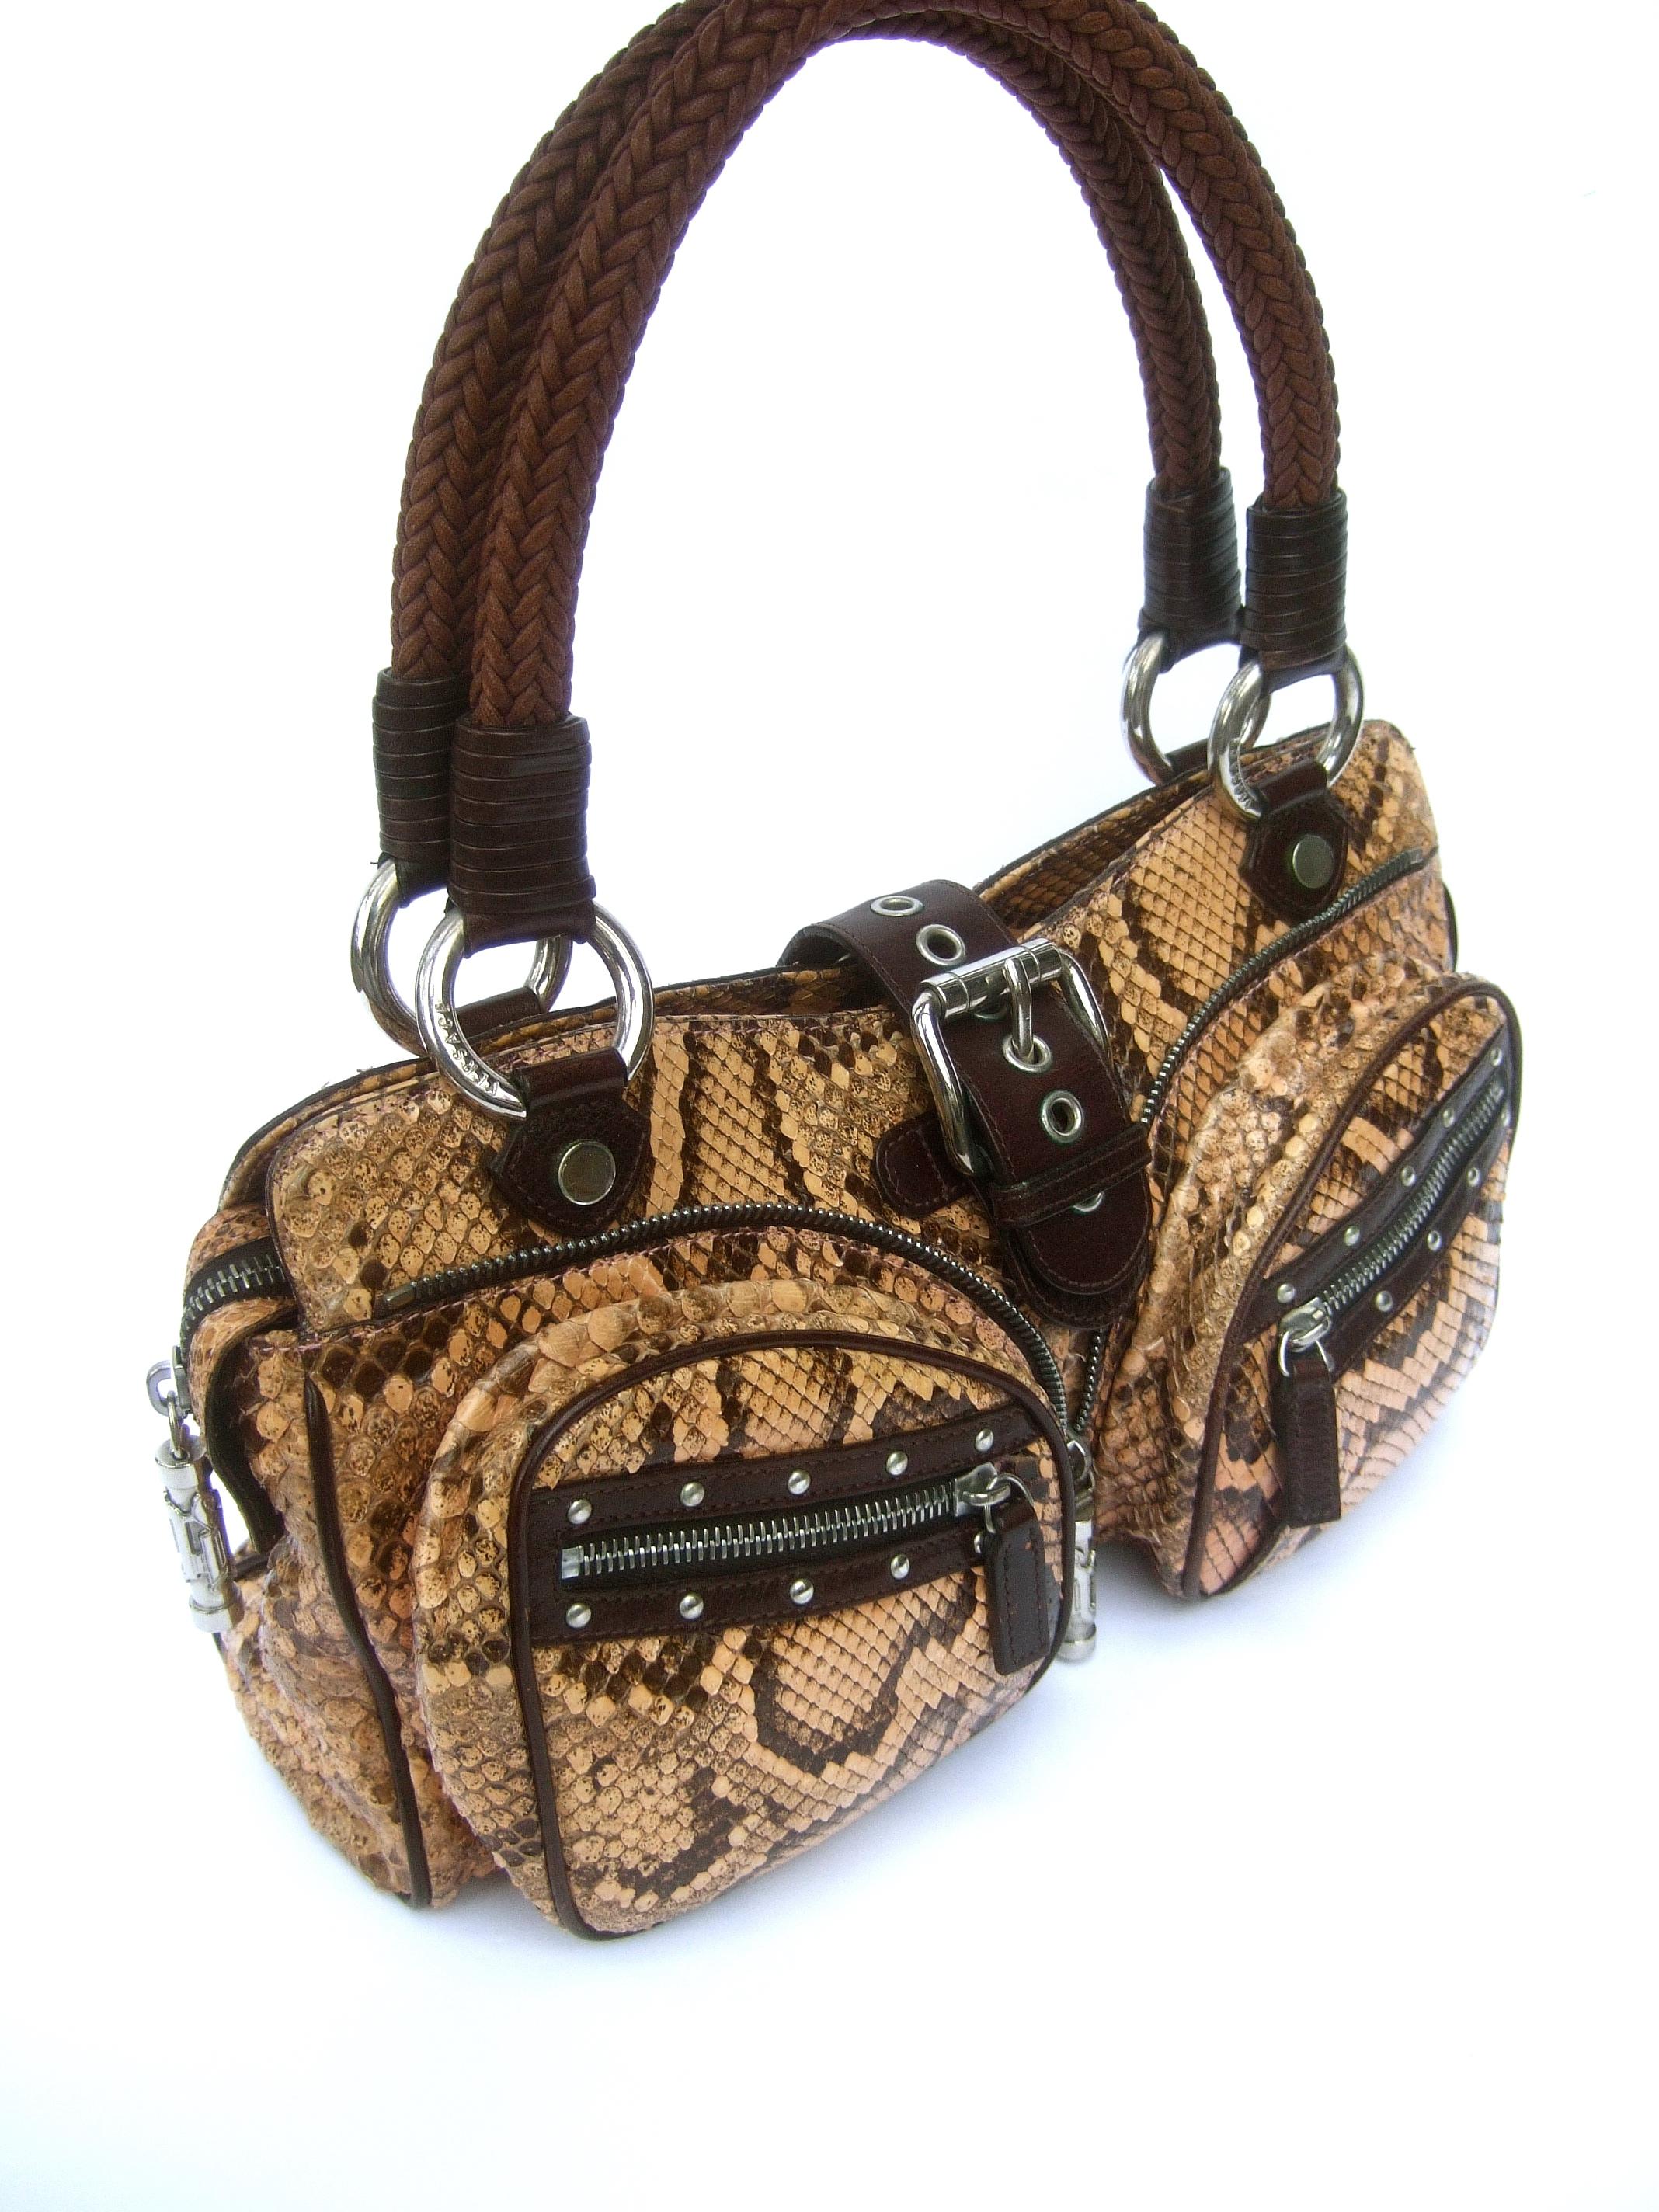 Versace Snakeskin Leather Trim Italian Handbag circa 1990s 14